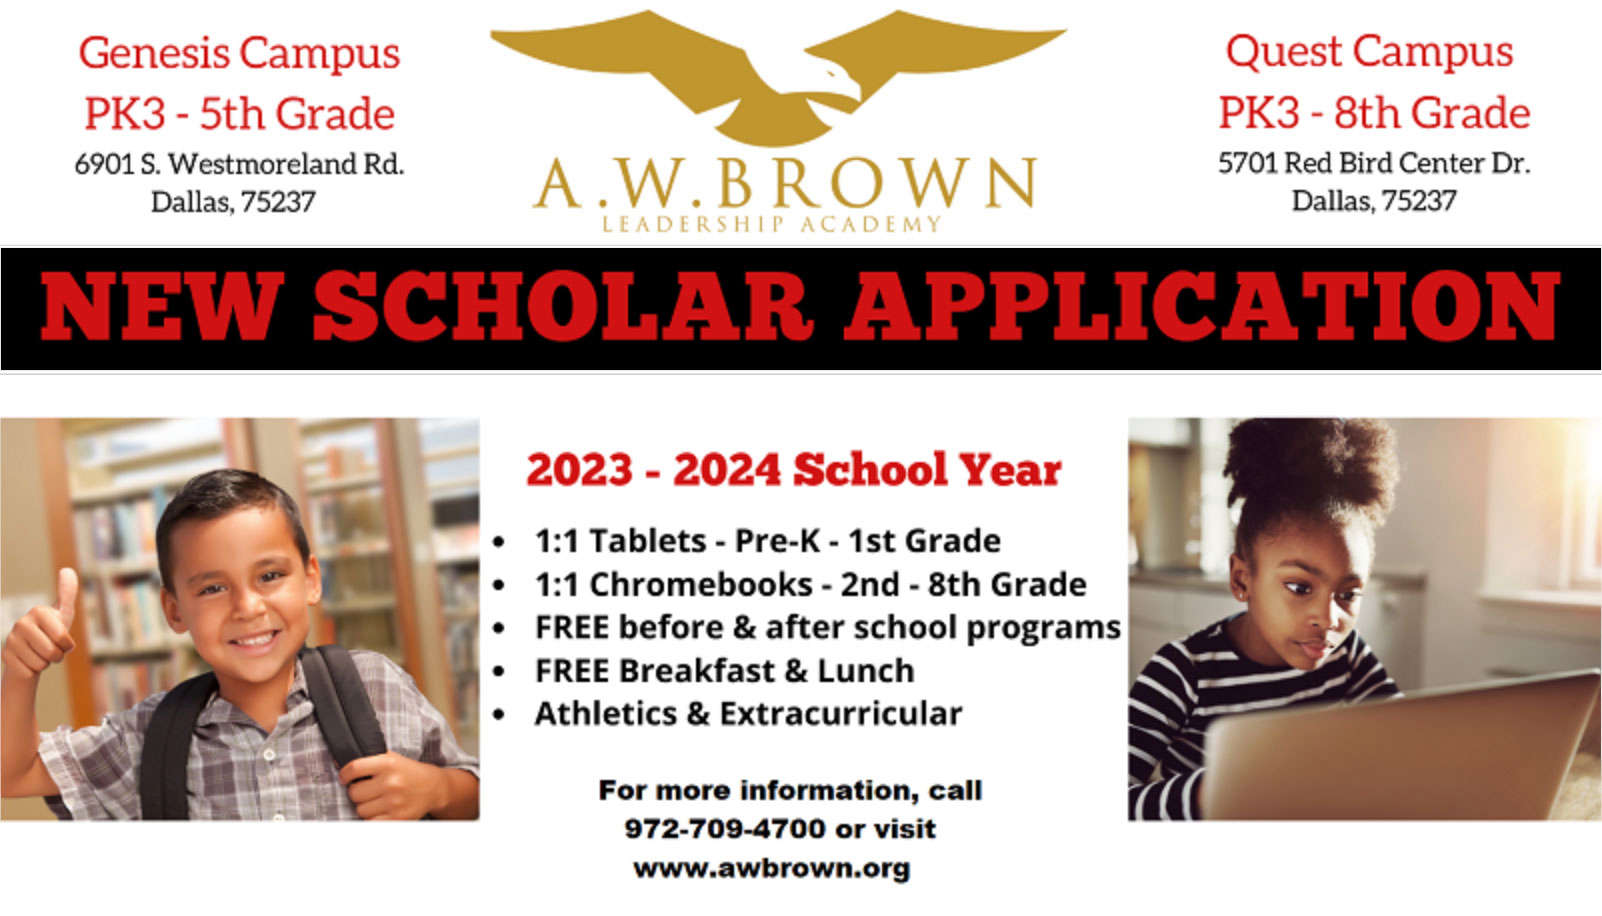 New Scholar Application. A.W. Brown Leadership Academy